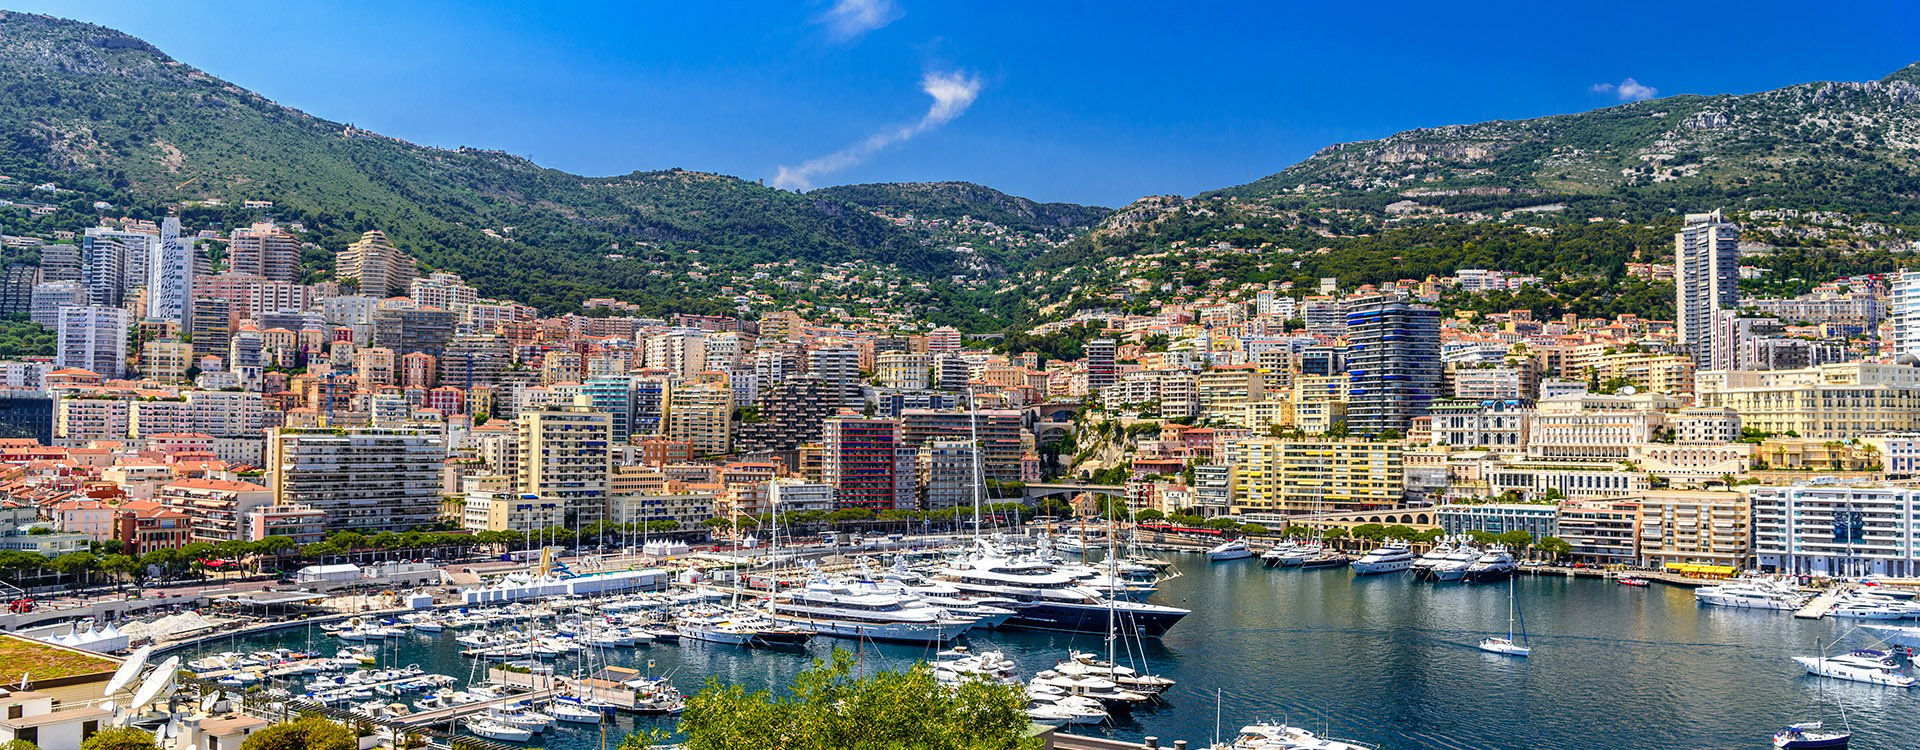 Yachts in bay near houses and hotels, La Condamine, Monte-Carlo, Monaco, Cote d'Azur, French Riviera.